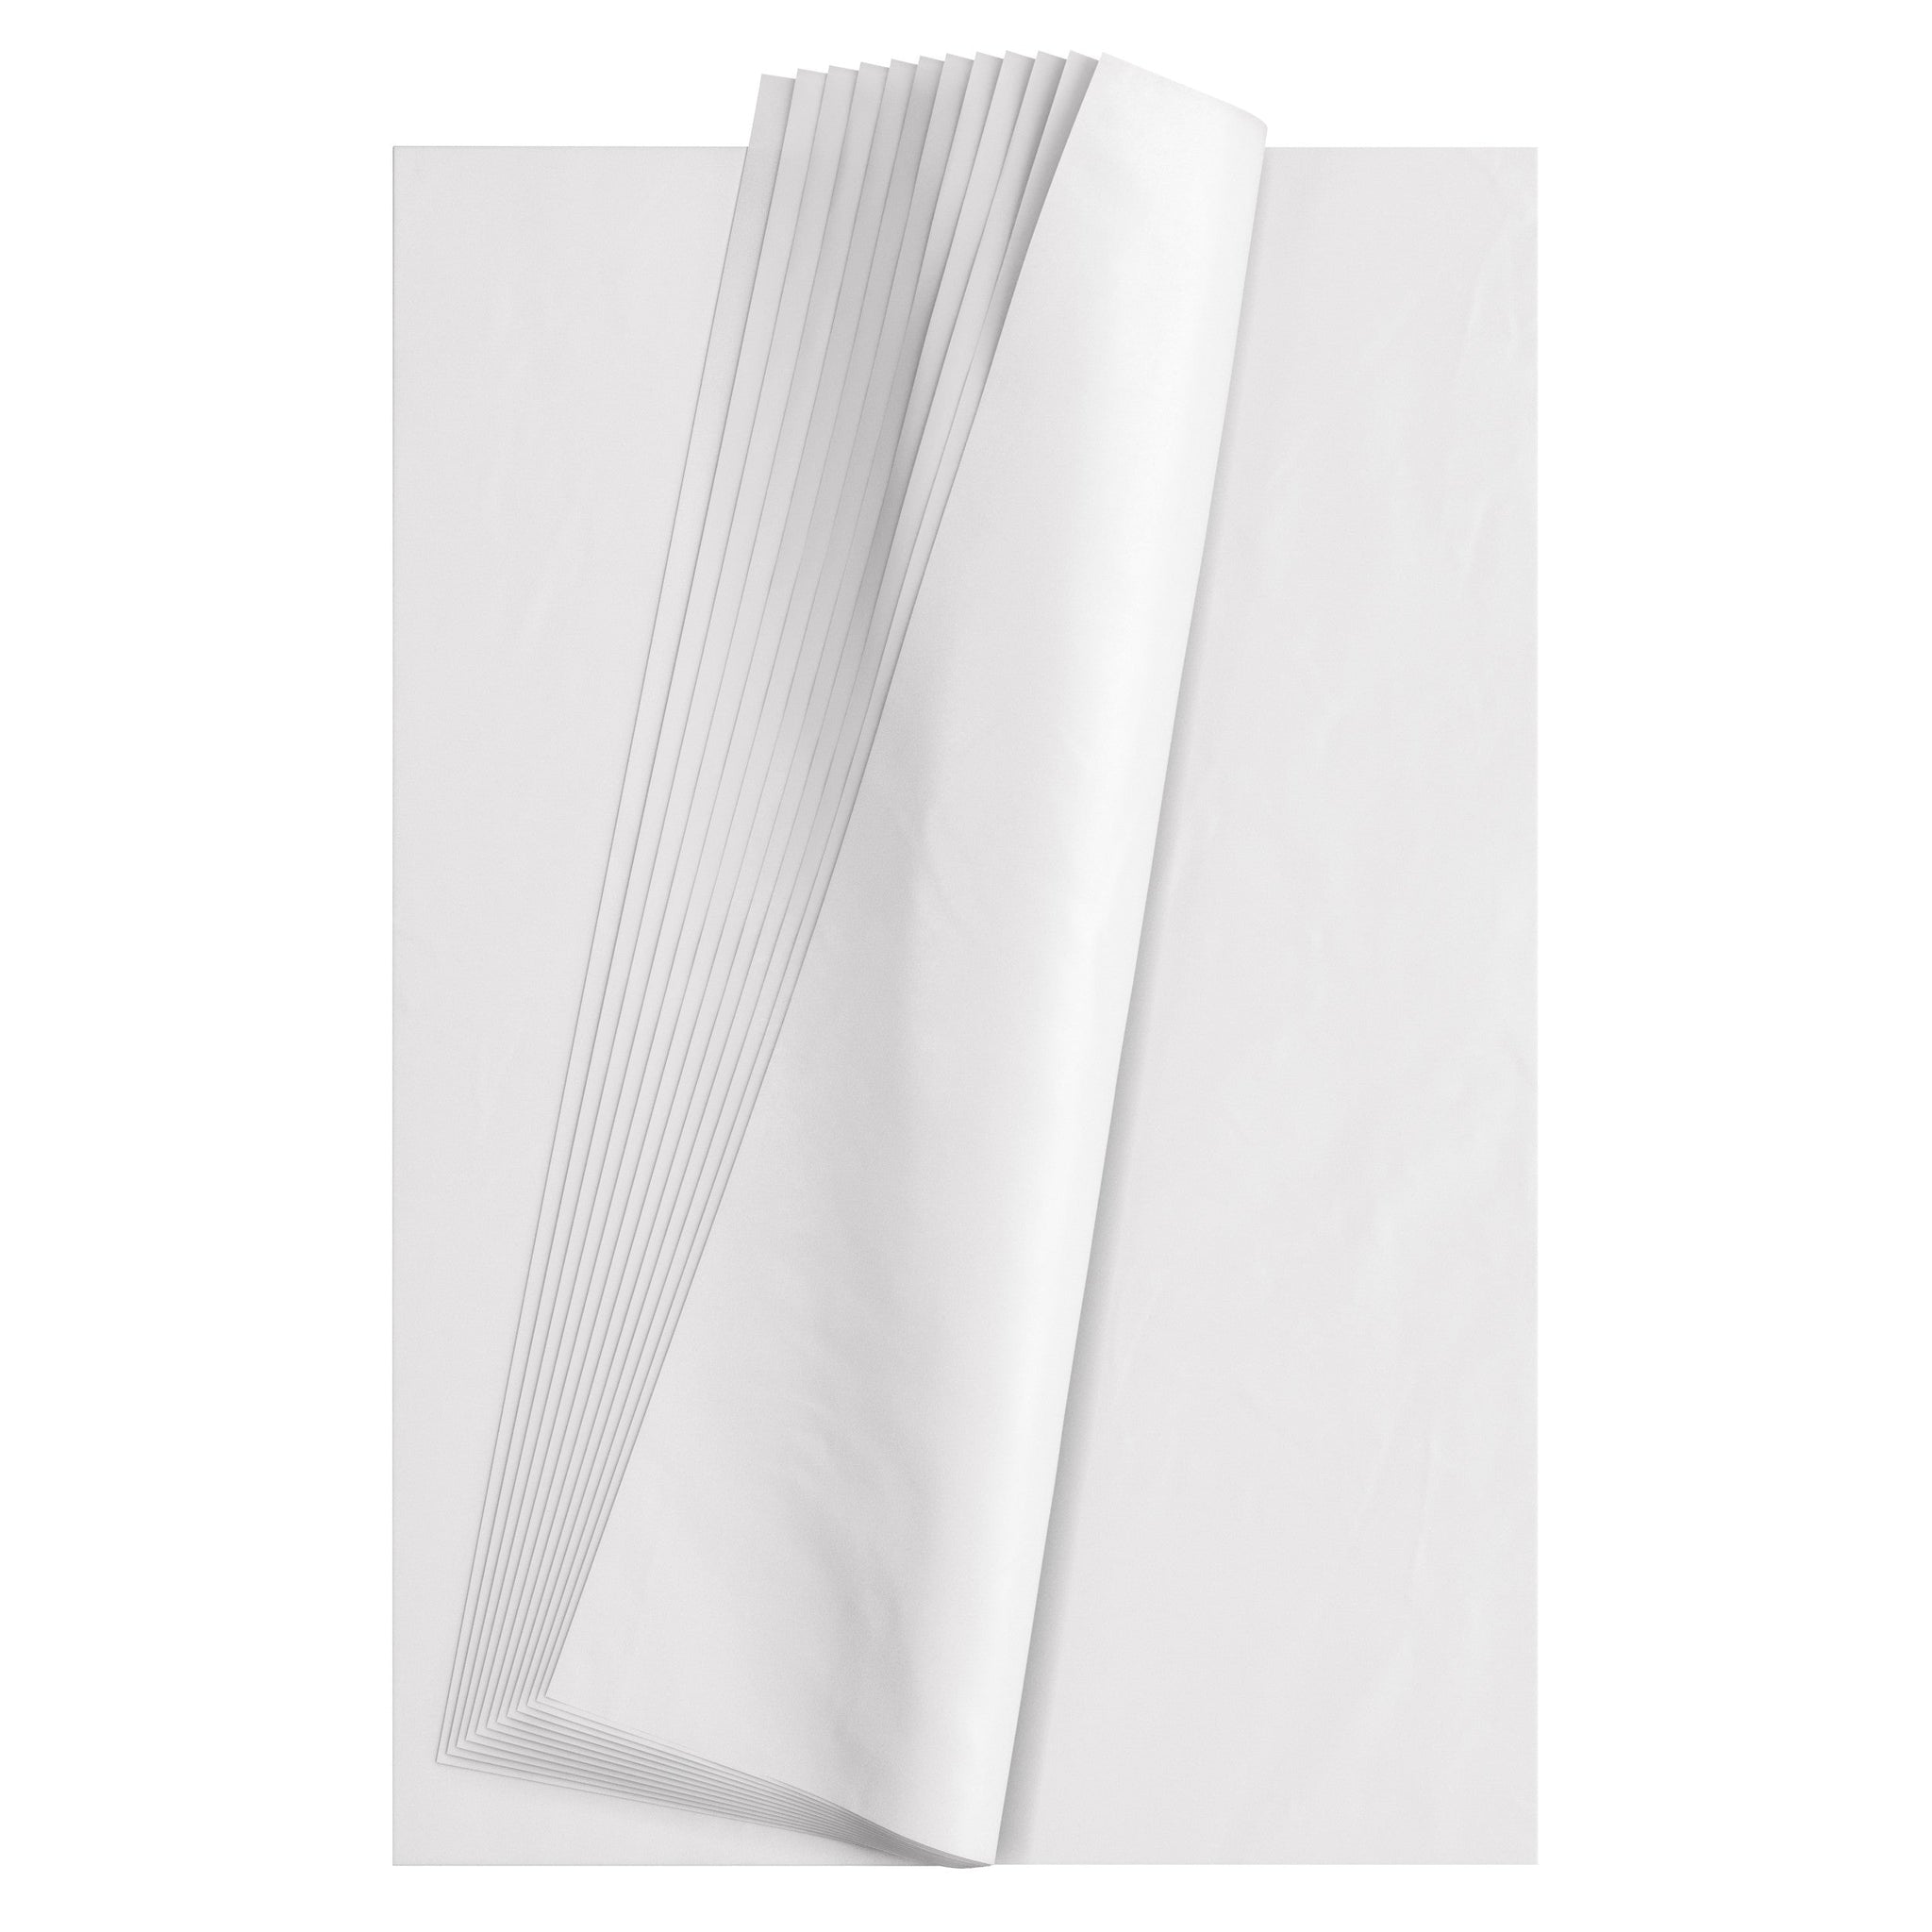 Tissue Paper – Black and White